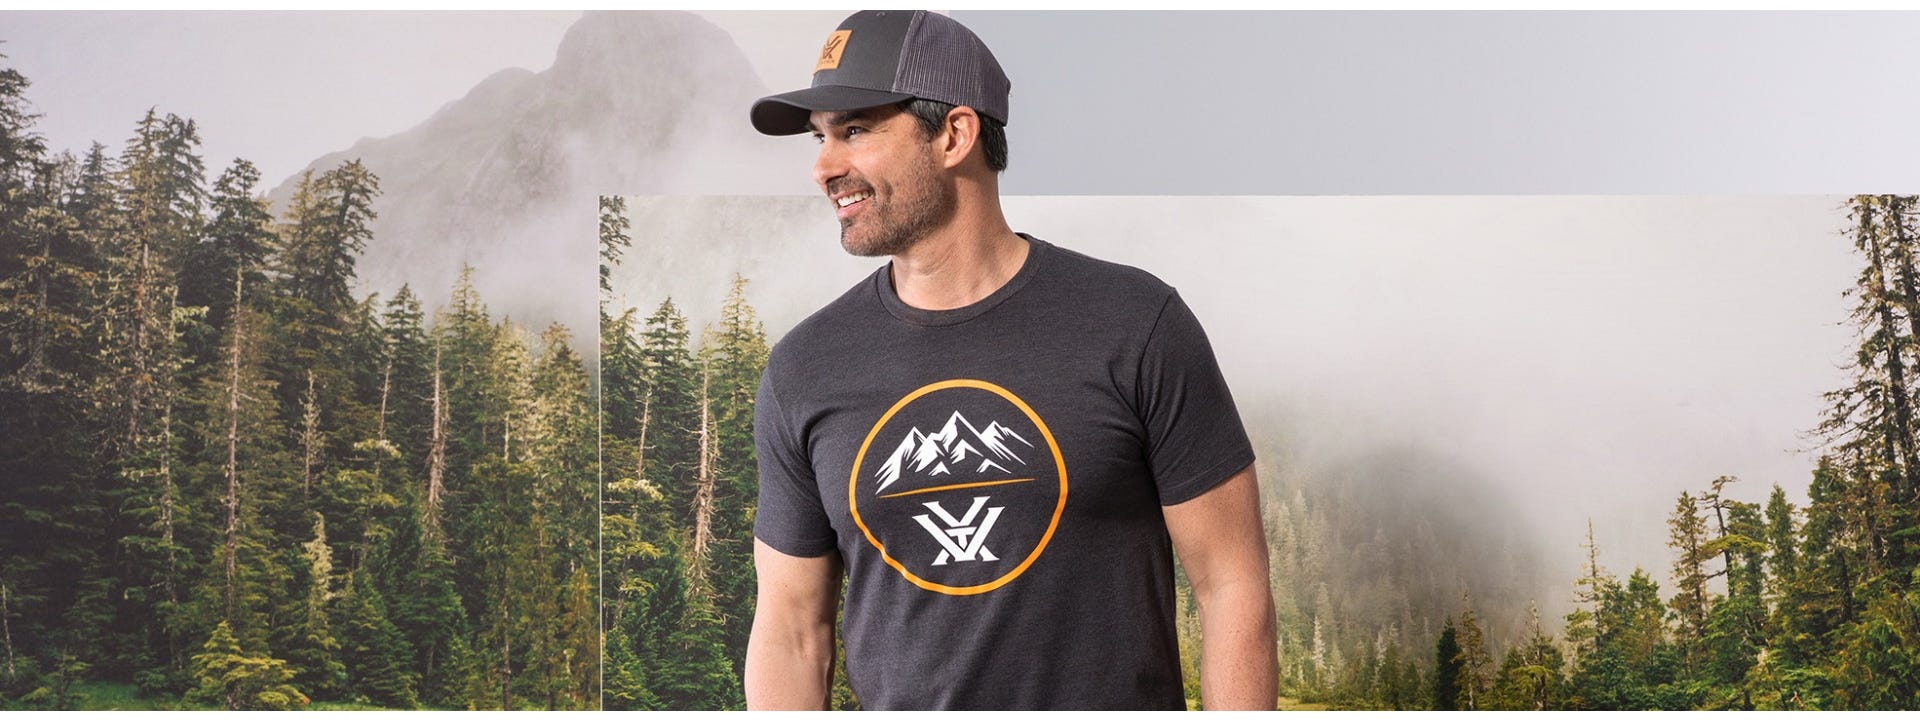 Vortex Men's Three Peaks T-Shirt - Charcoal Heather